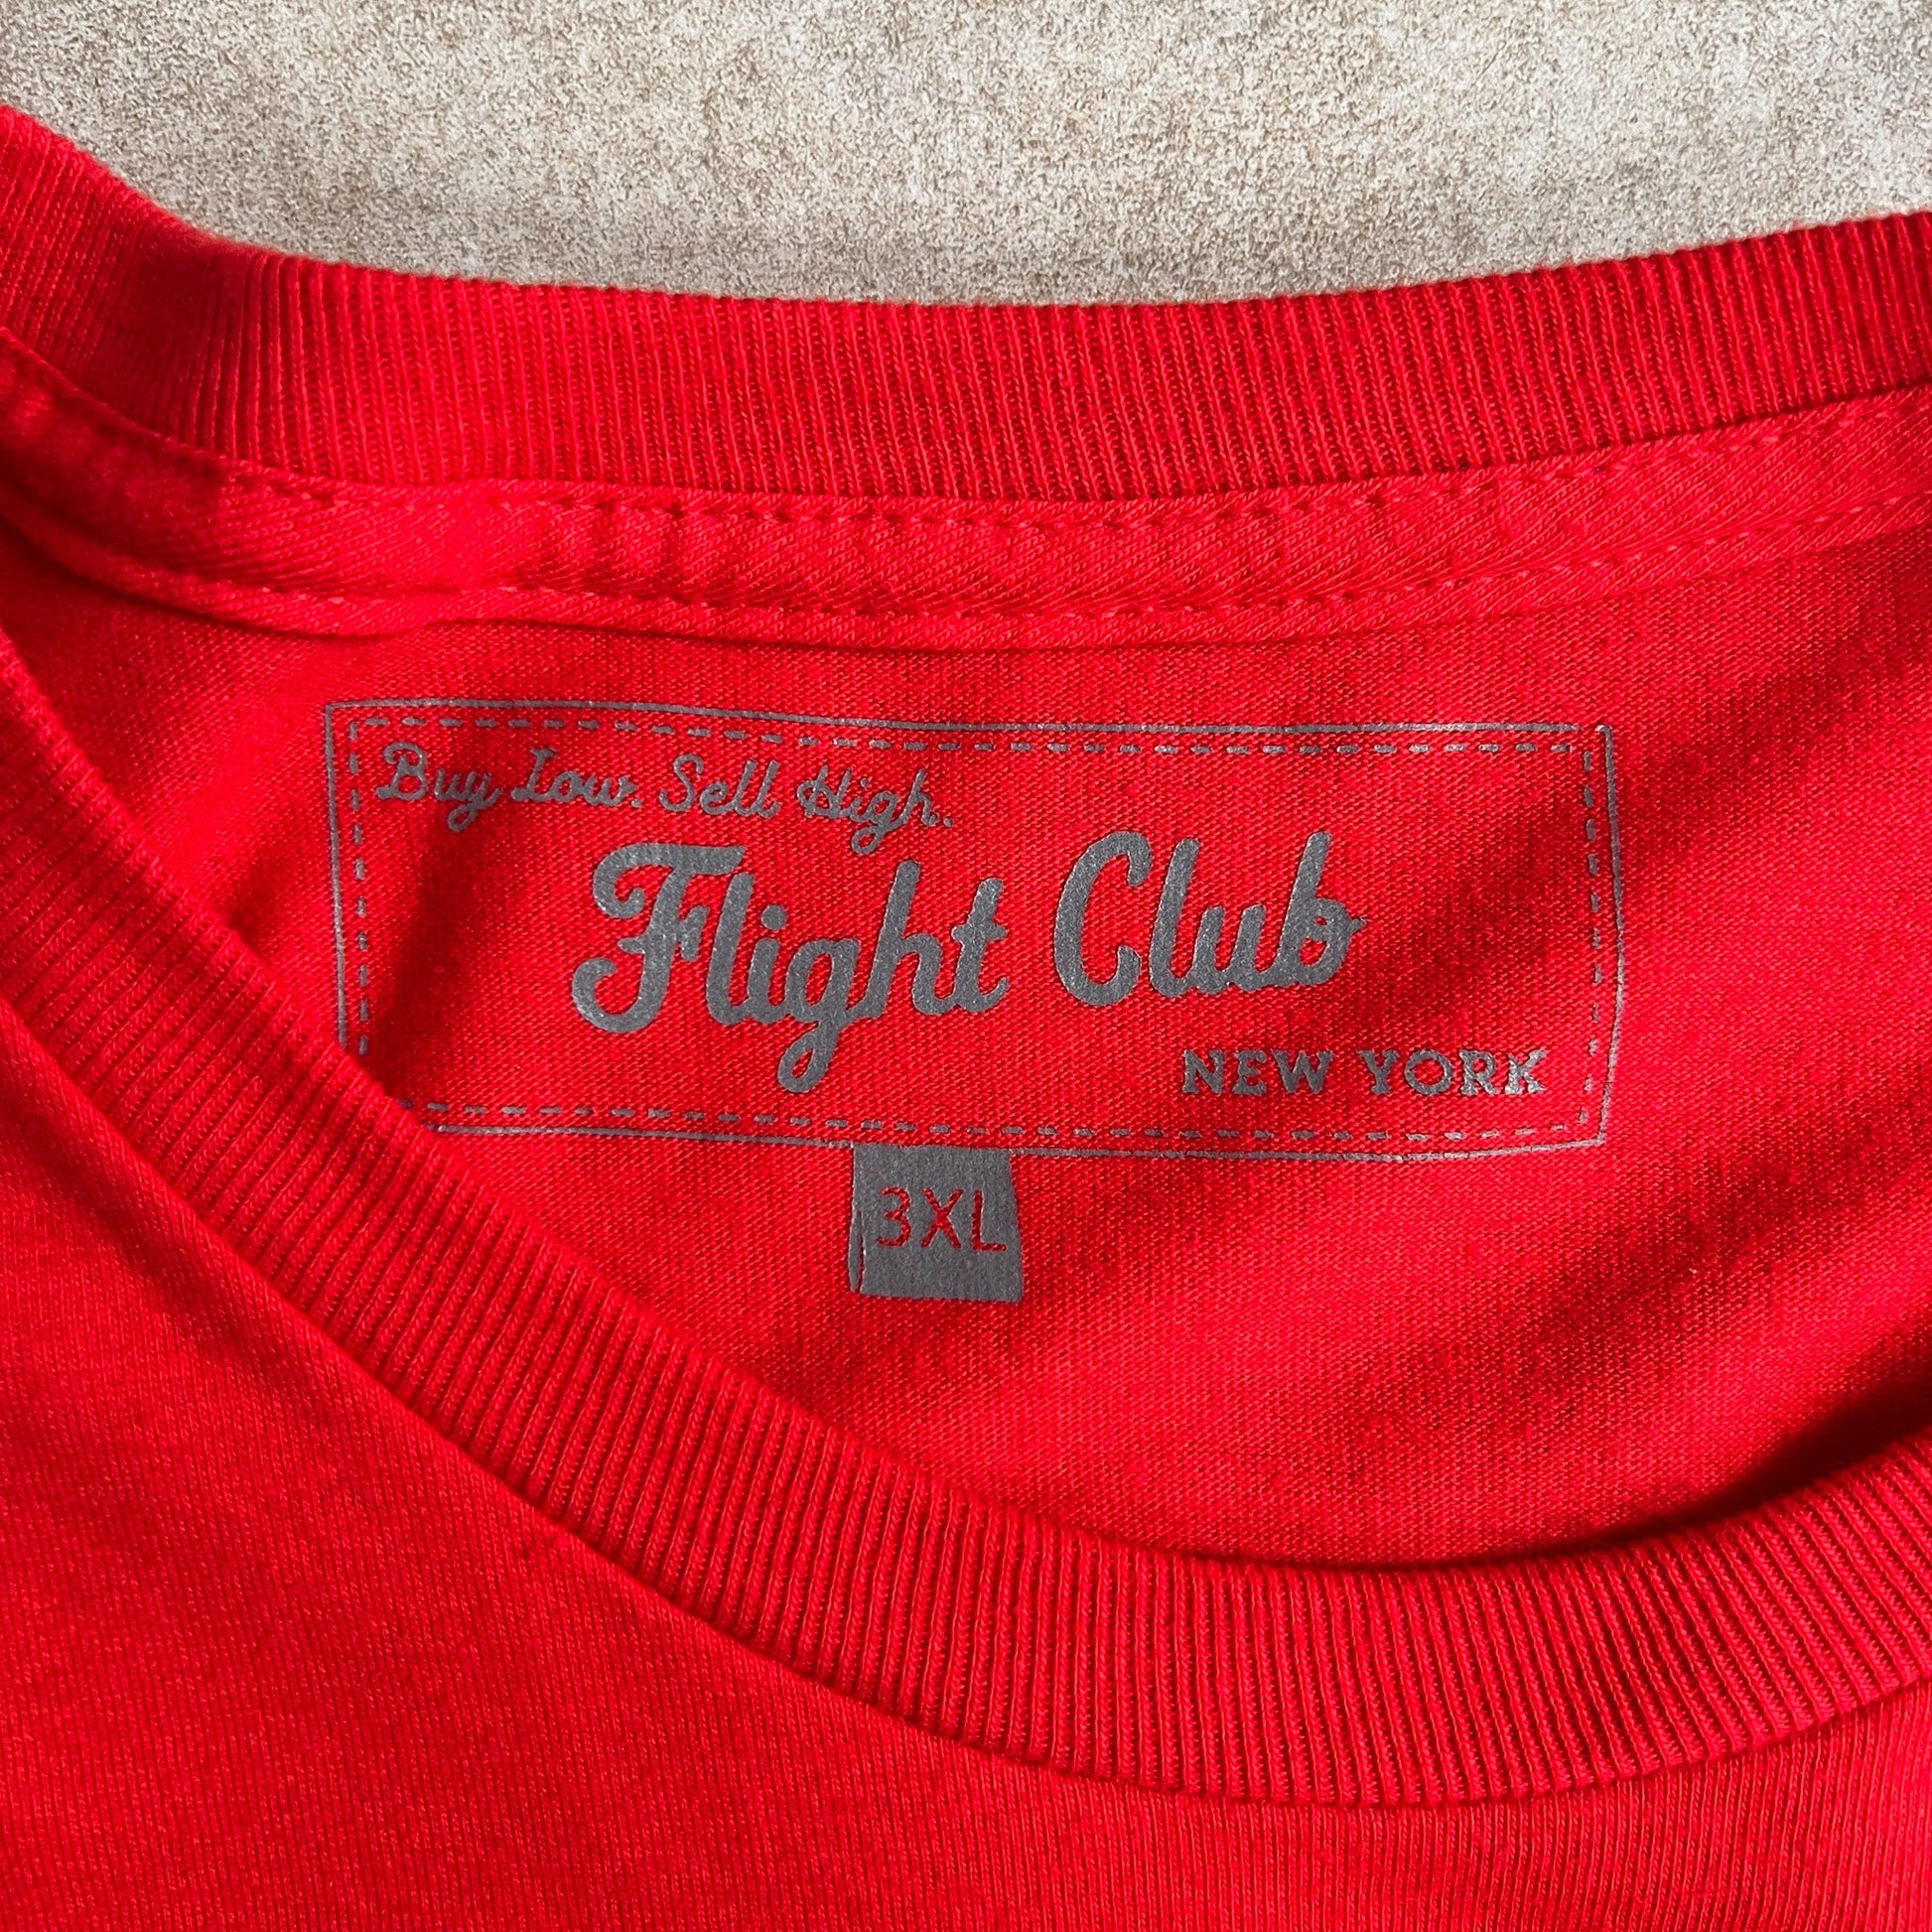 2000s Rare Flight Club Los Angeles Red T Shirt - 3XL sullivansvintage